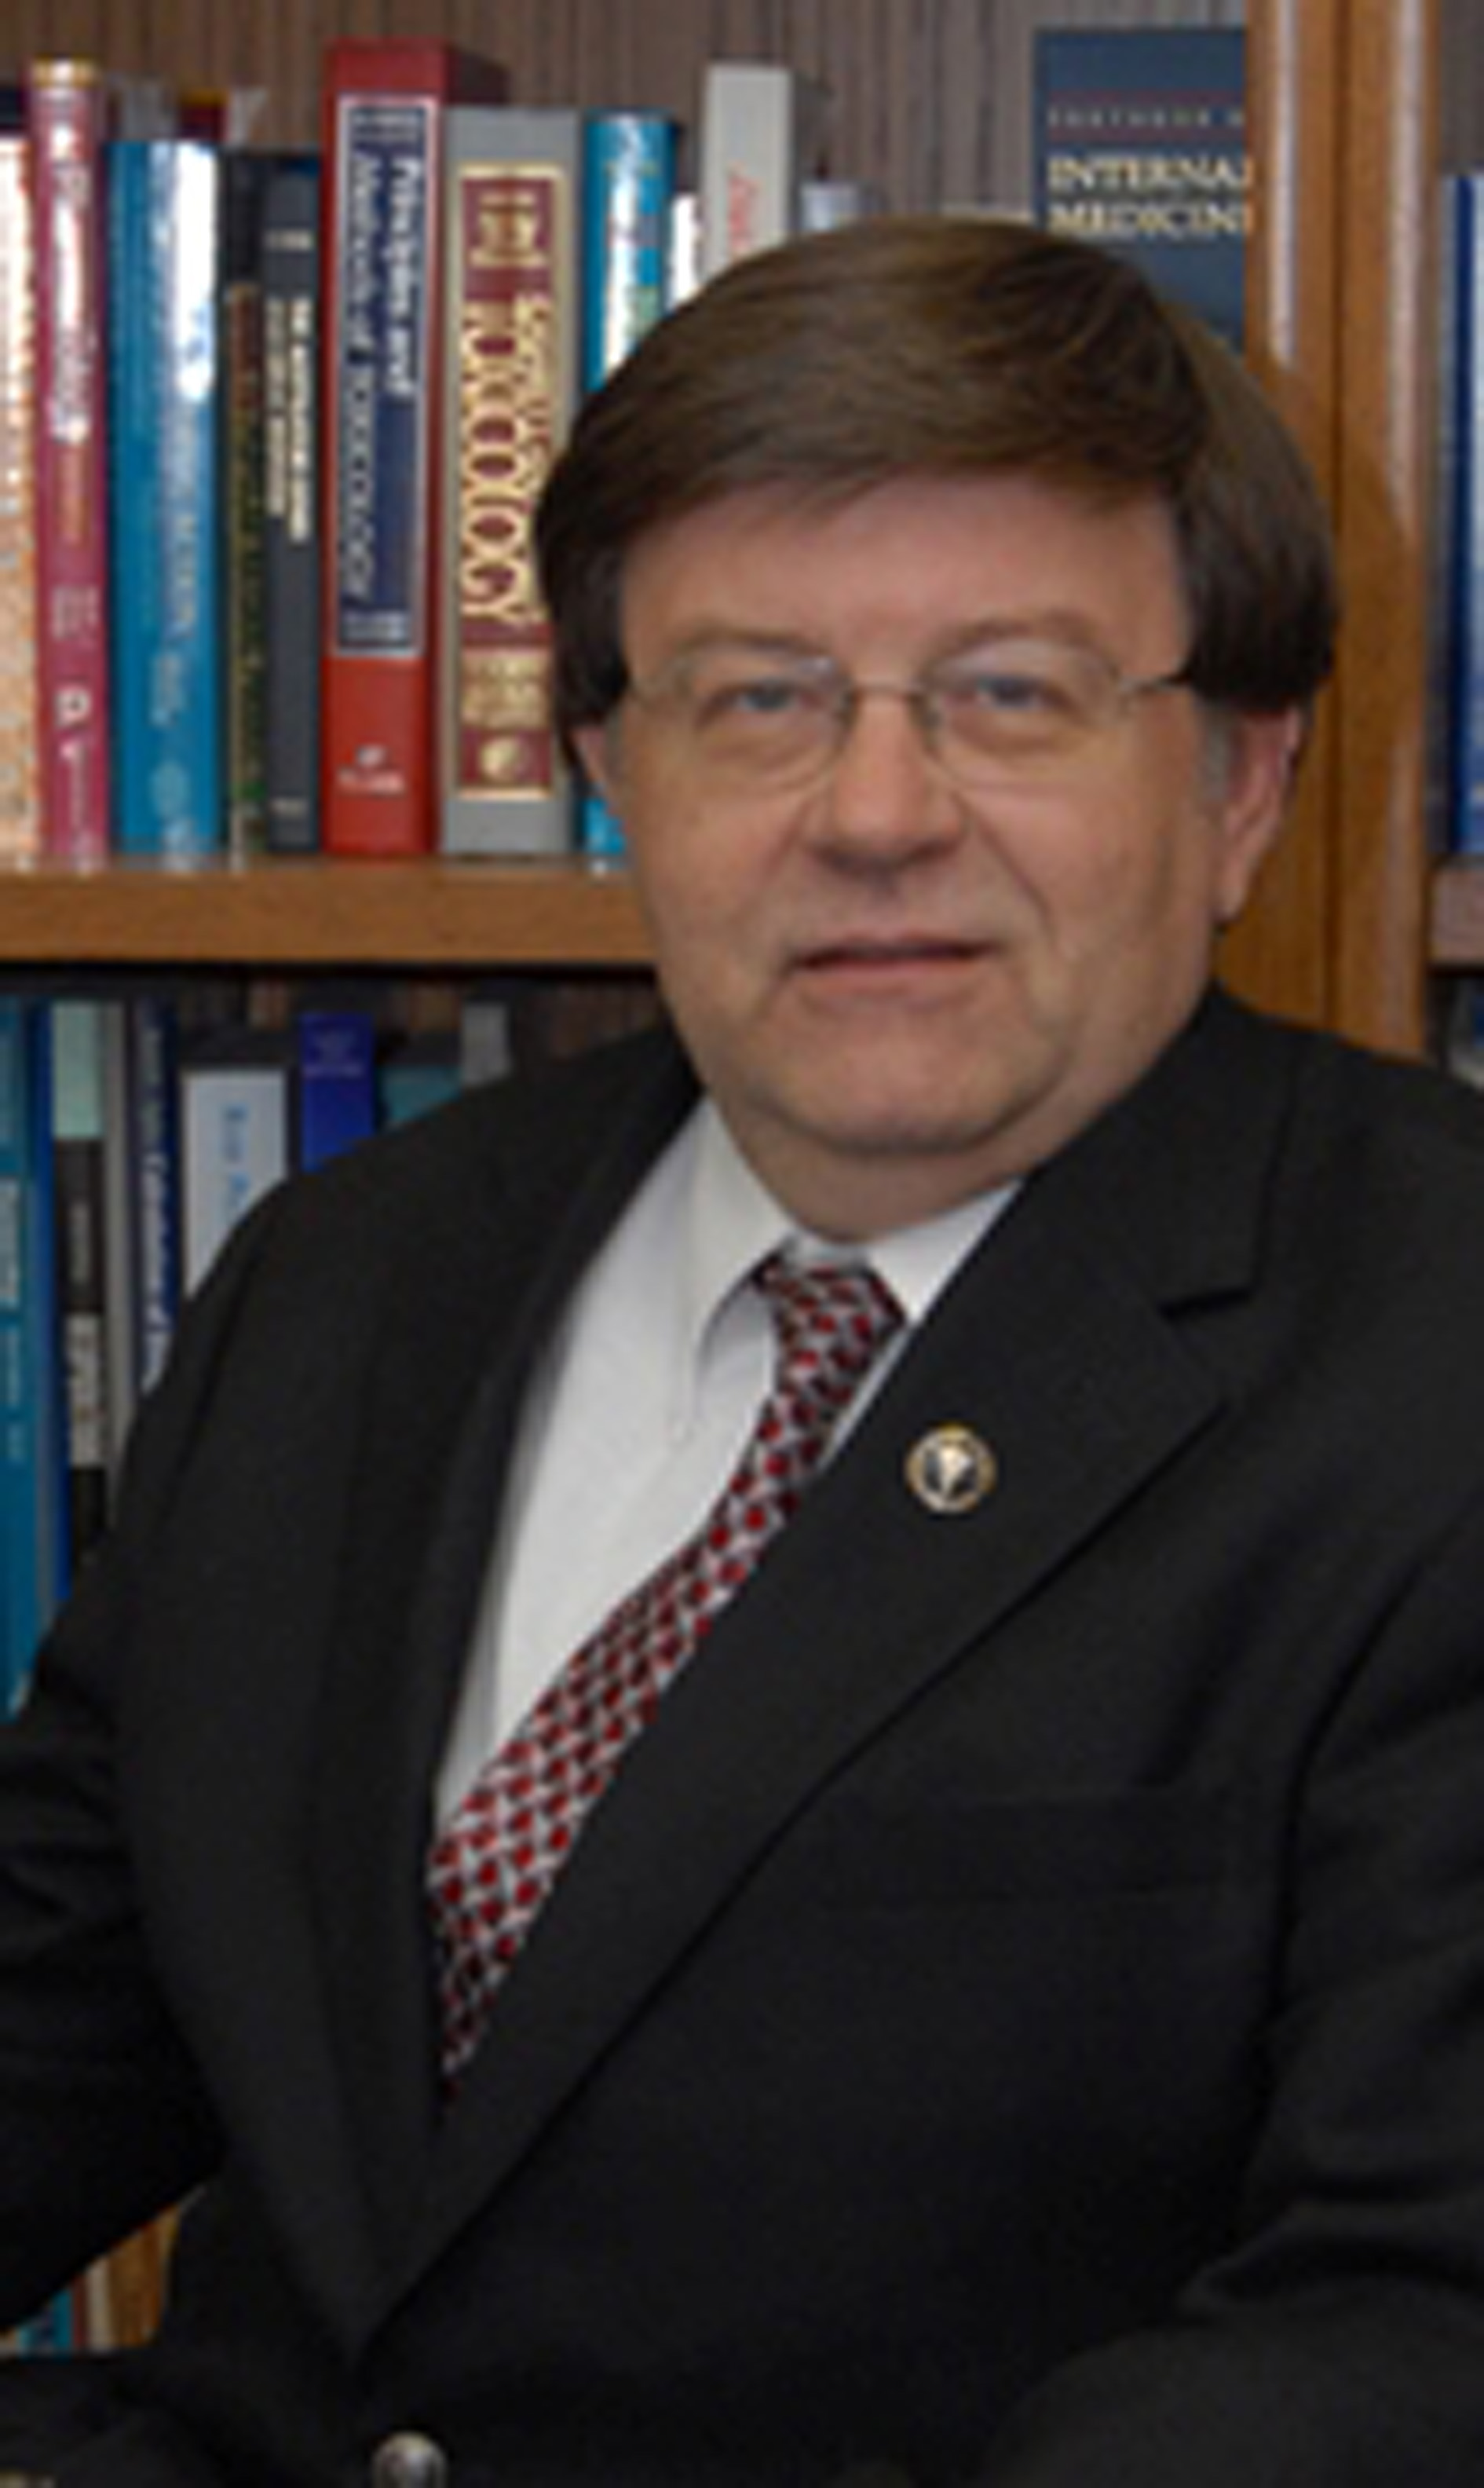 Professor David Hein